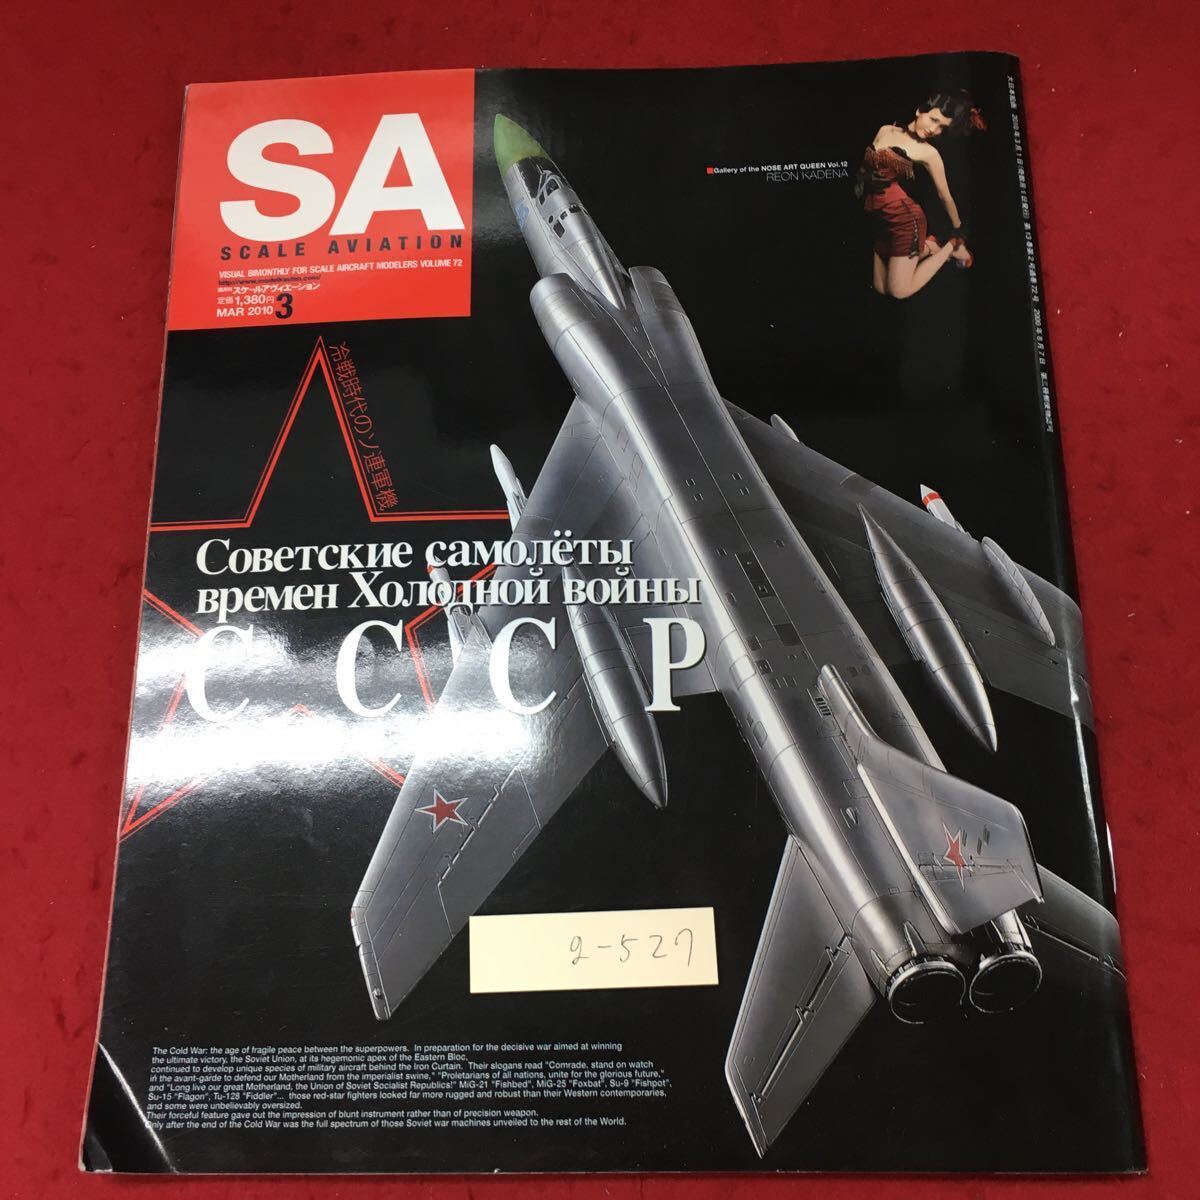 g-527 ※4 隔月刊 スケールアヴィテーション 2010年3月号 2010年3月1日 発行 大日本絵画 雑誌 プラモデル 飛行機 写真 戦闘機_表紙に折りあり